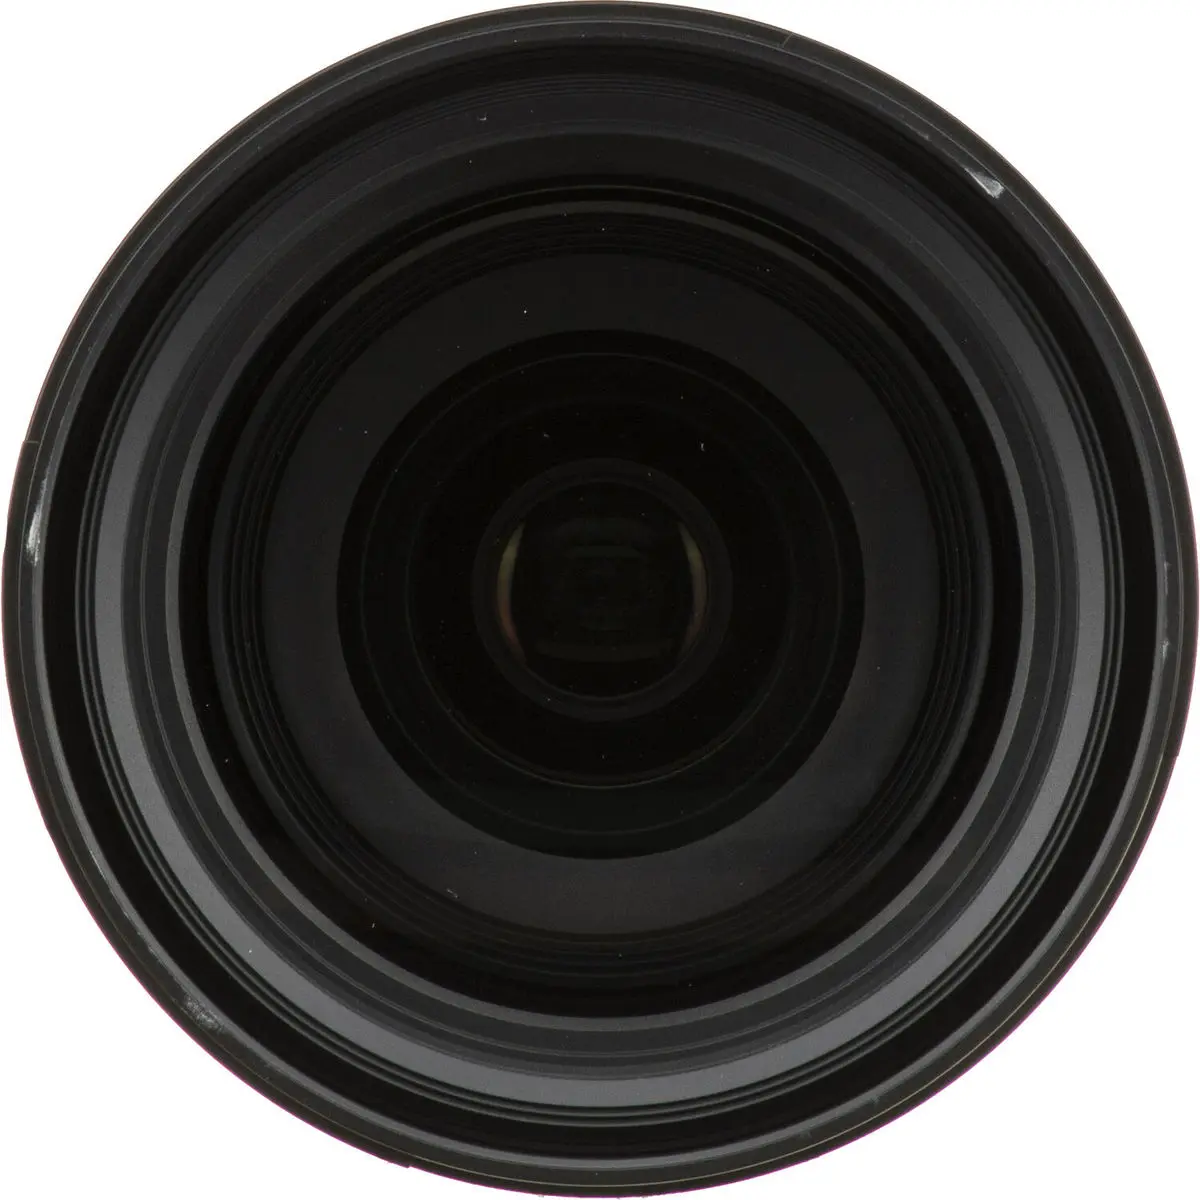 3. Sigma 24-70mm F2.8 DG DN | Art (E-mount) Lens